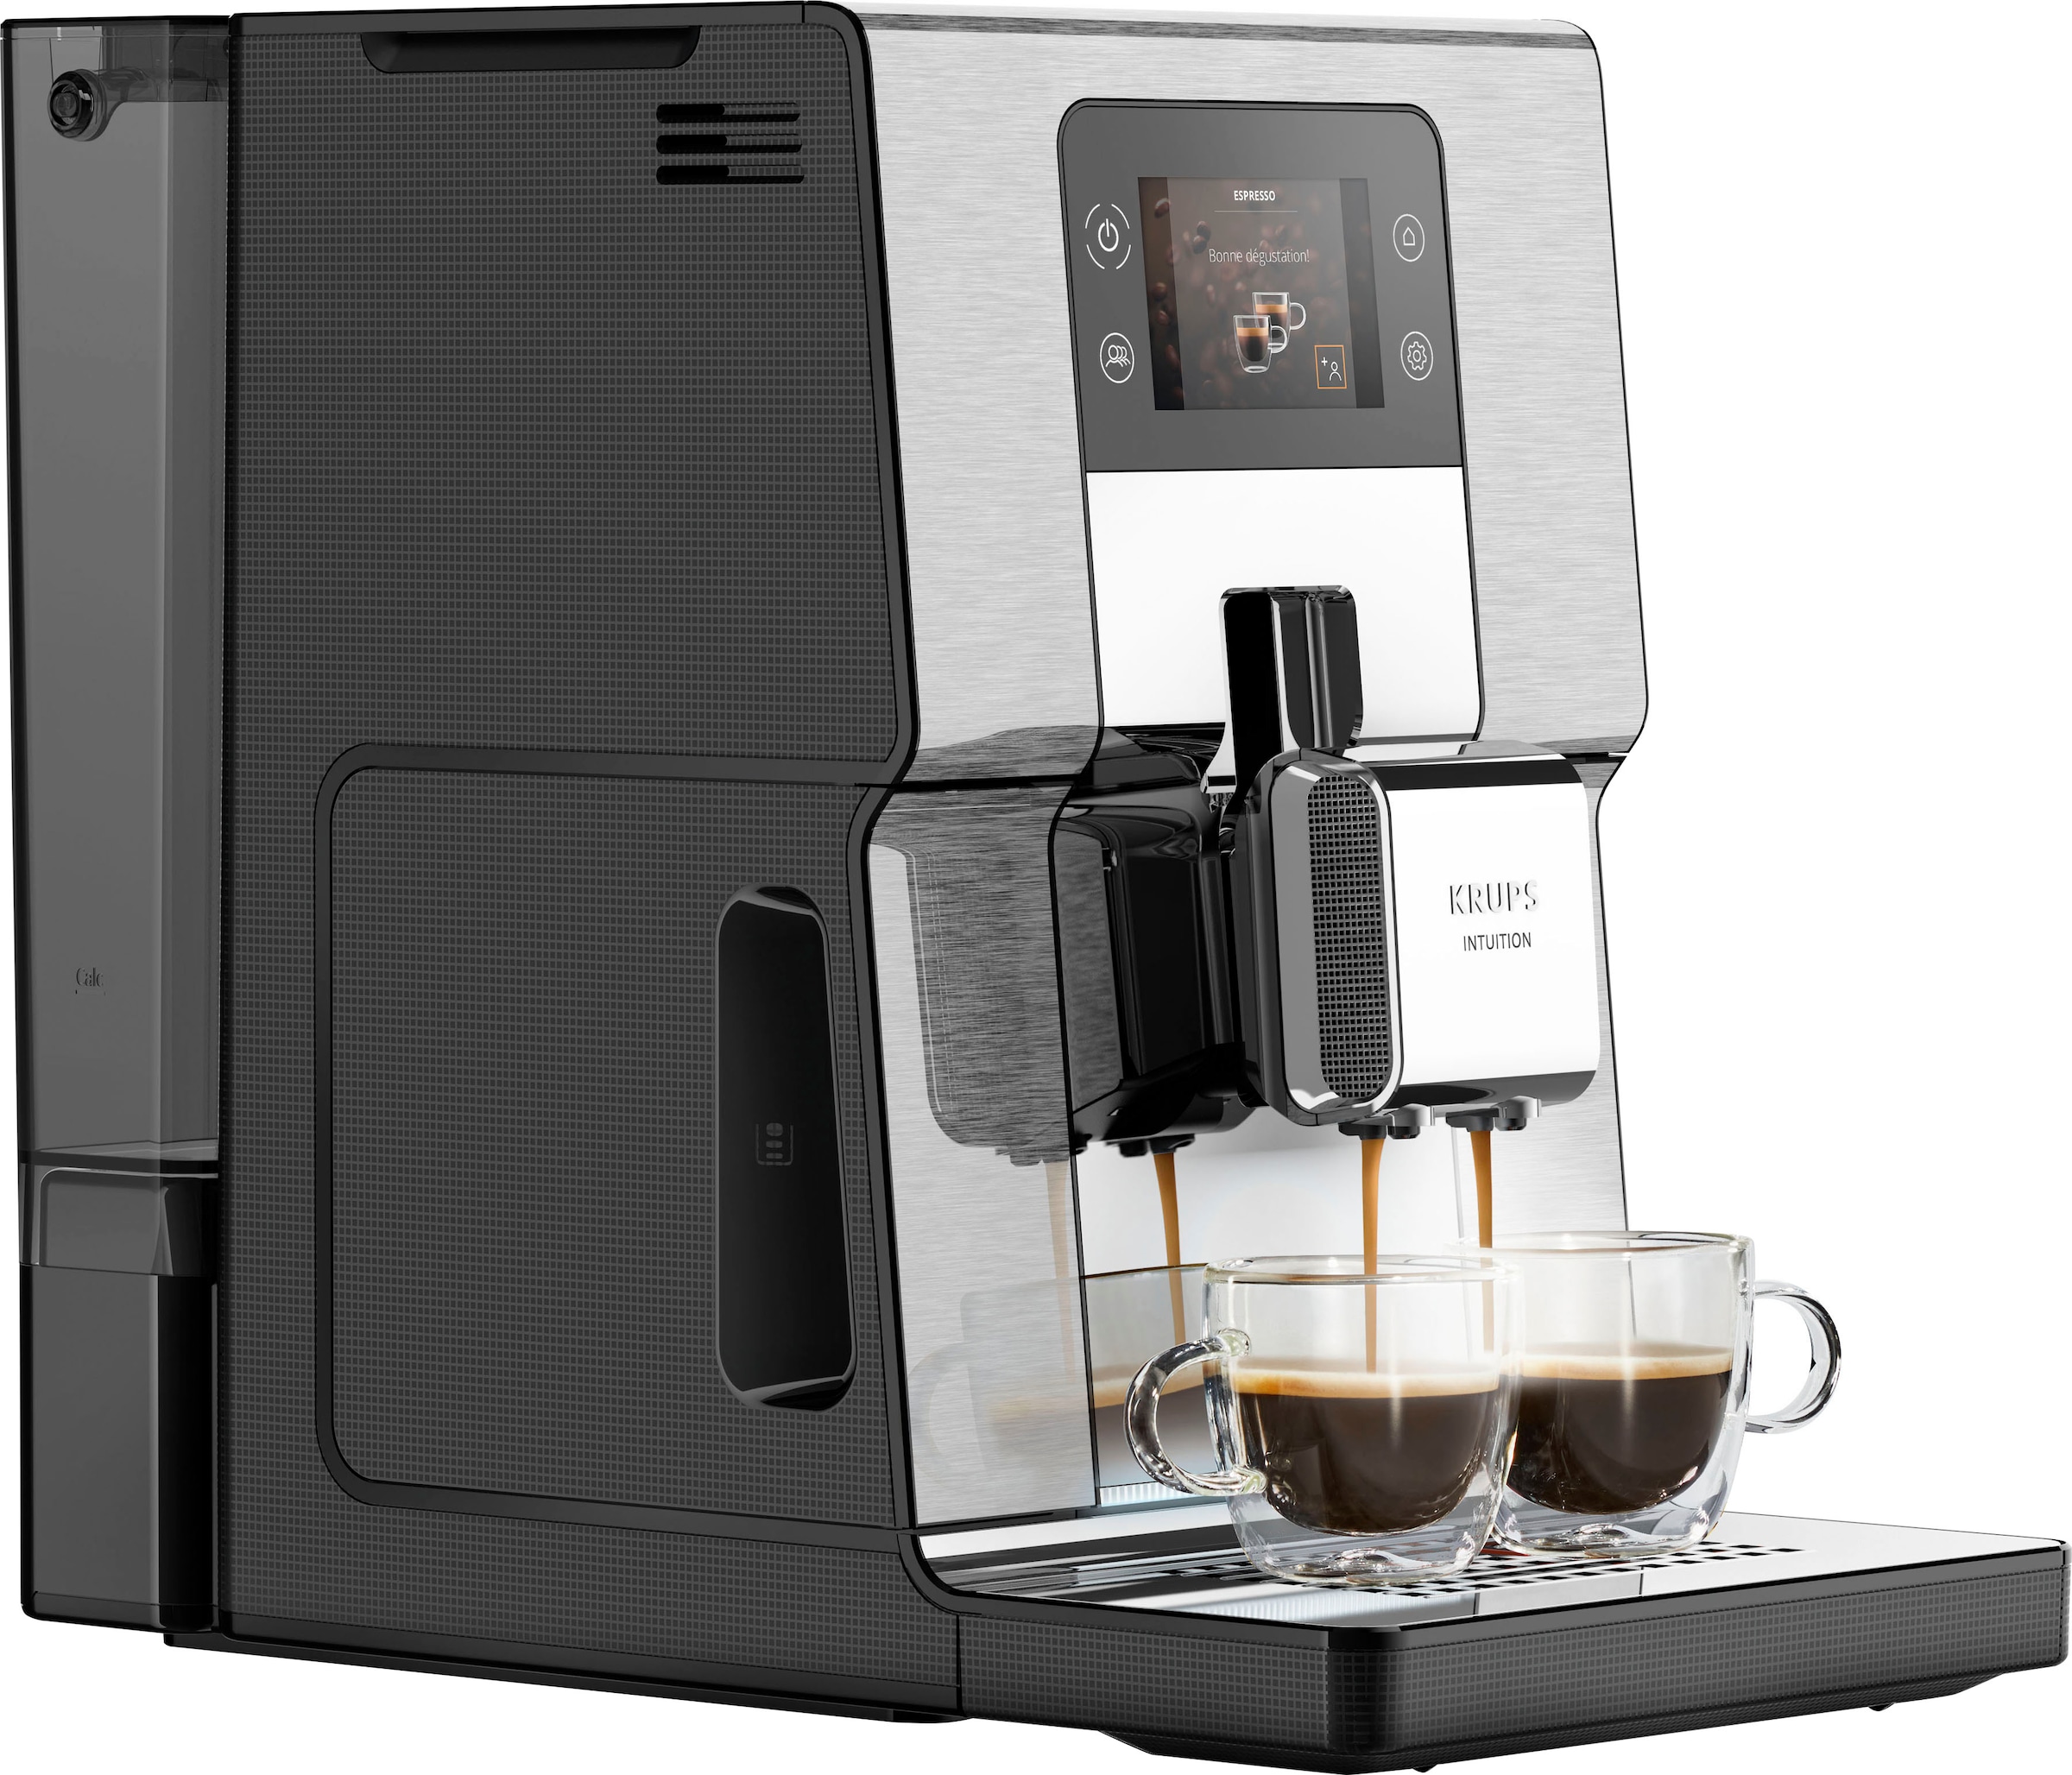 Heiß- geräuscharm, jetzt Kaffeevollautomat Krups Farb-Touchscreen kaufen Experience+«, OTTO bei »EA877D Kaltgetränke-Spezialitäten, und Intuition 21